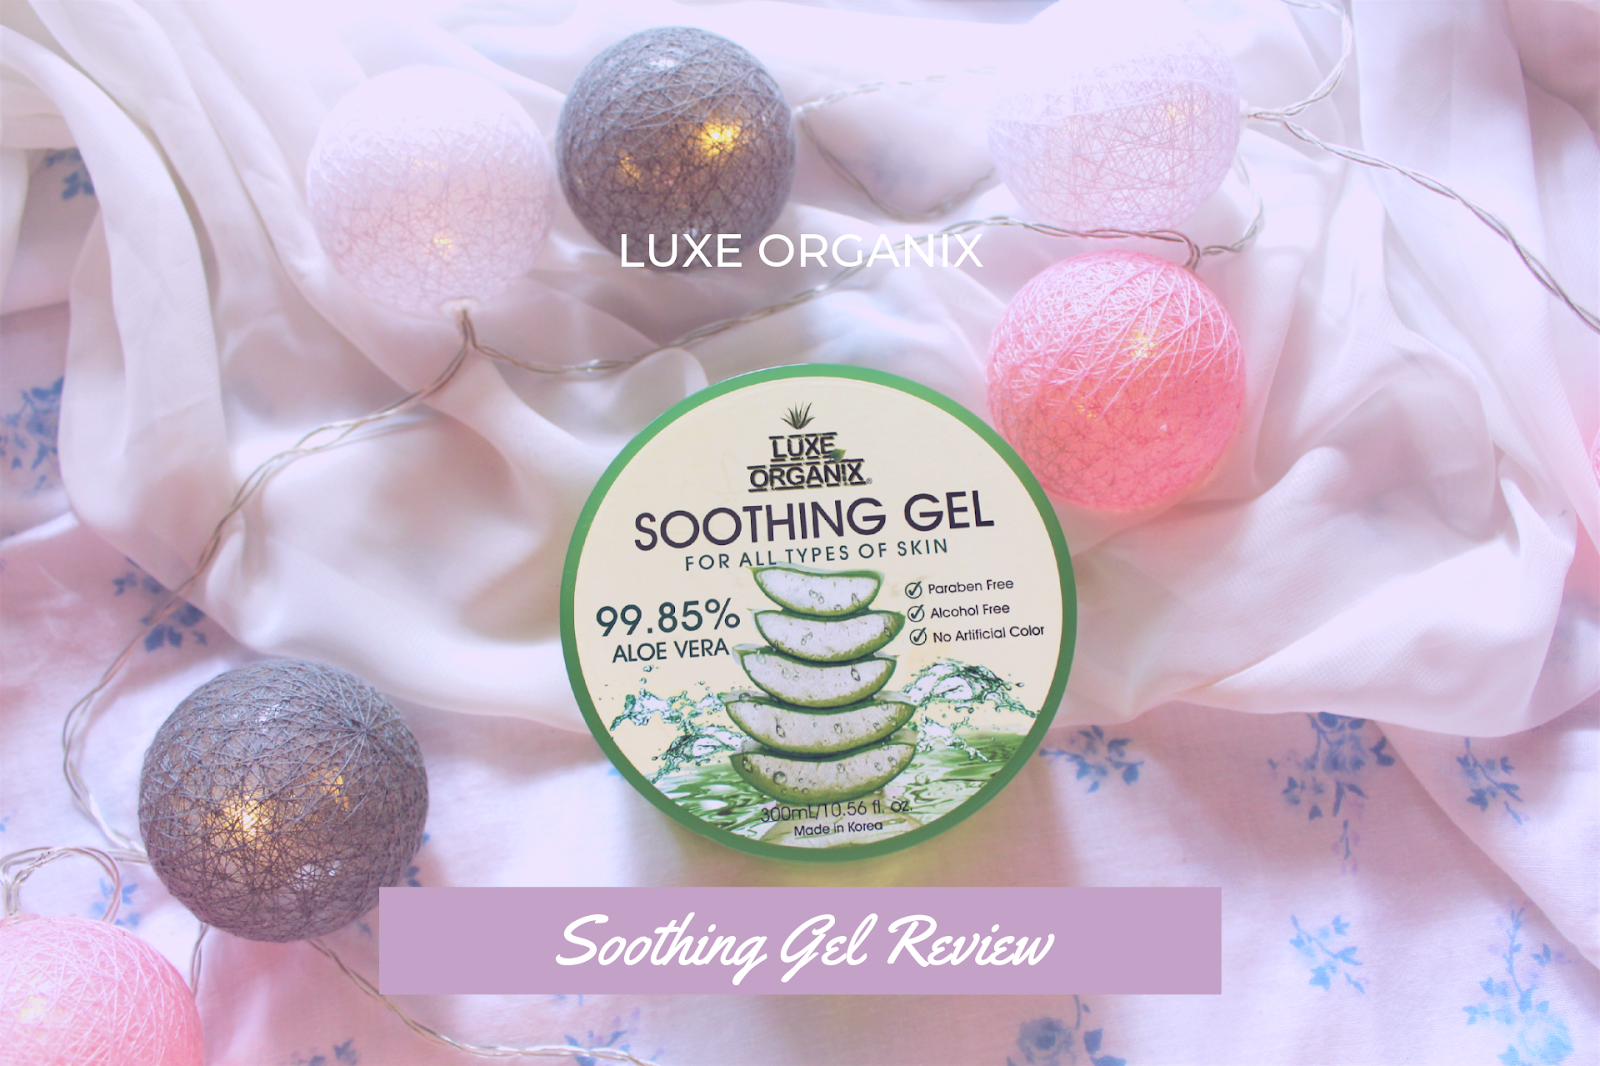 Luxe Organix Soothing Gel Review